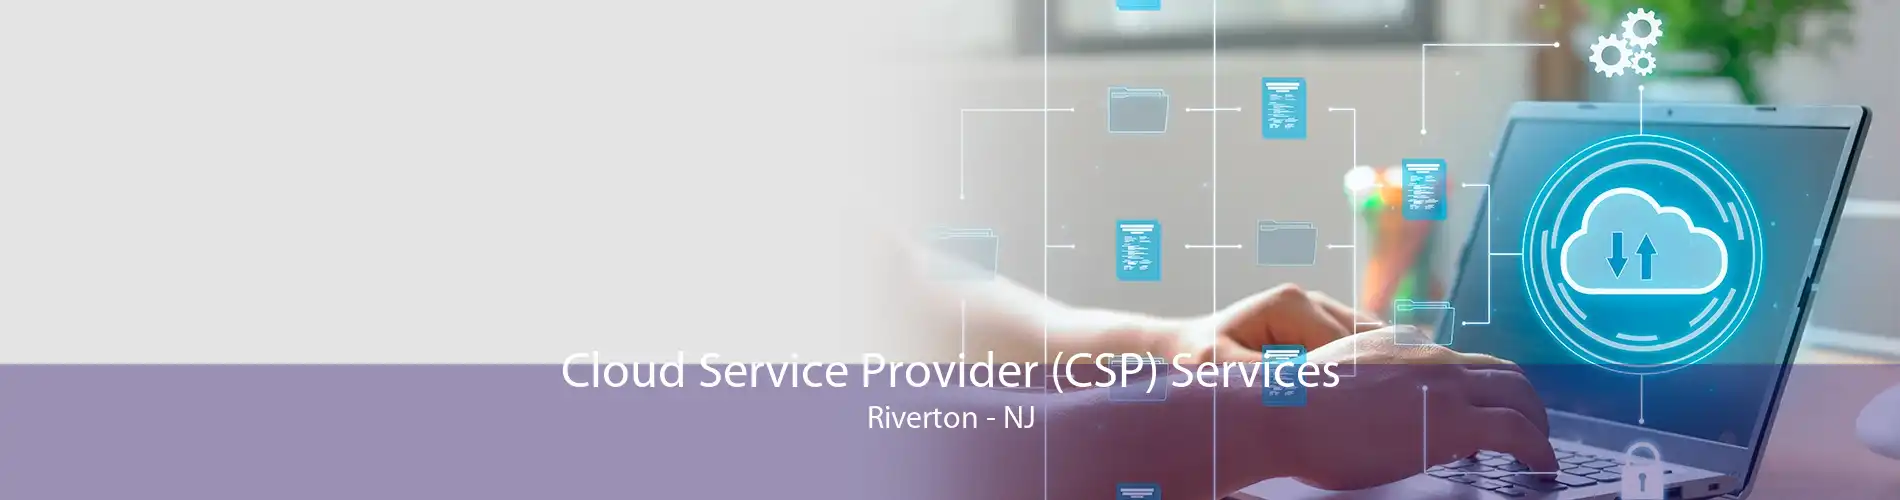 Cloud Service Provider (CSP) Services Riverton - NJ